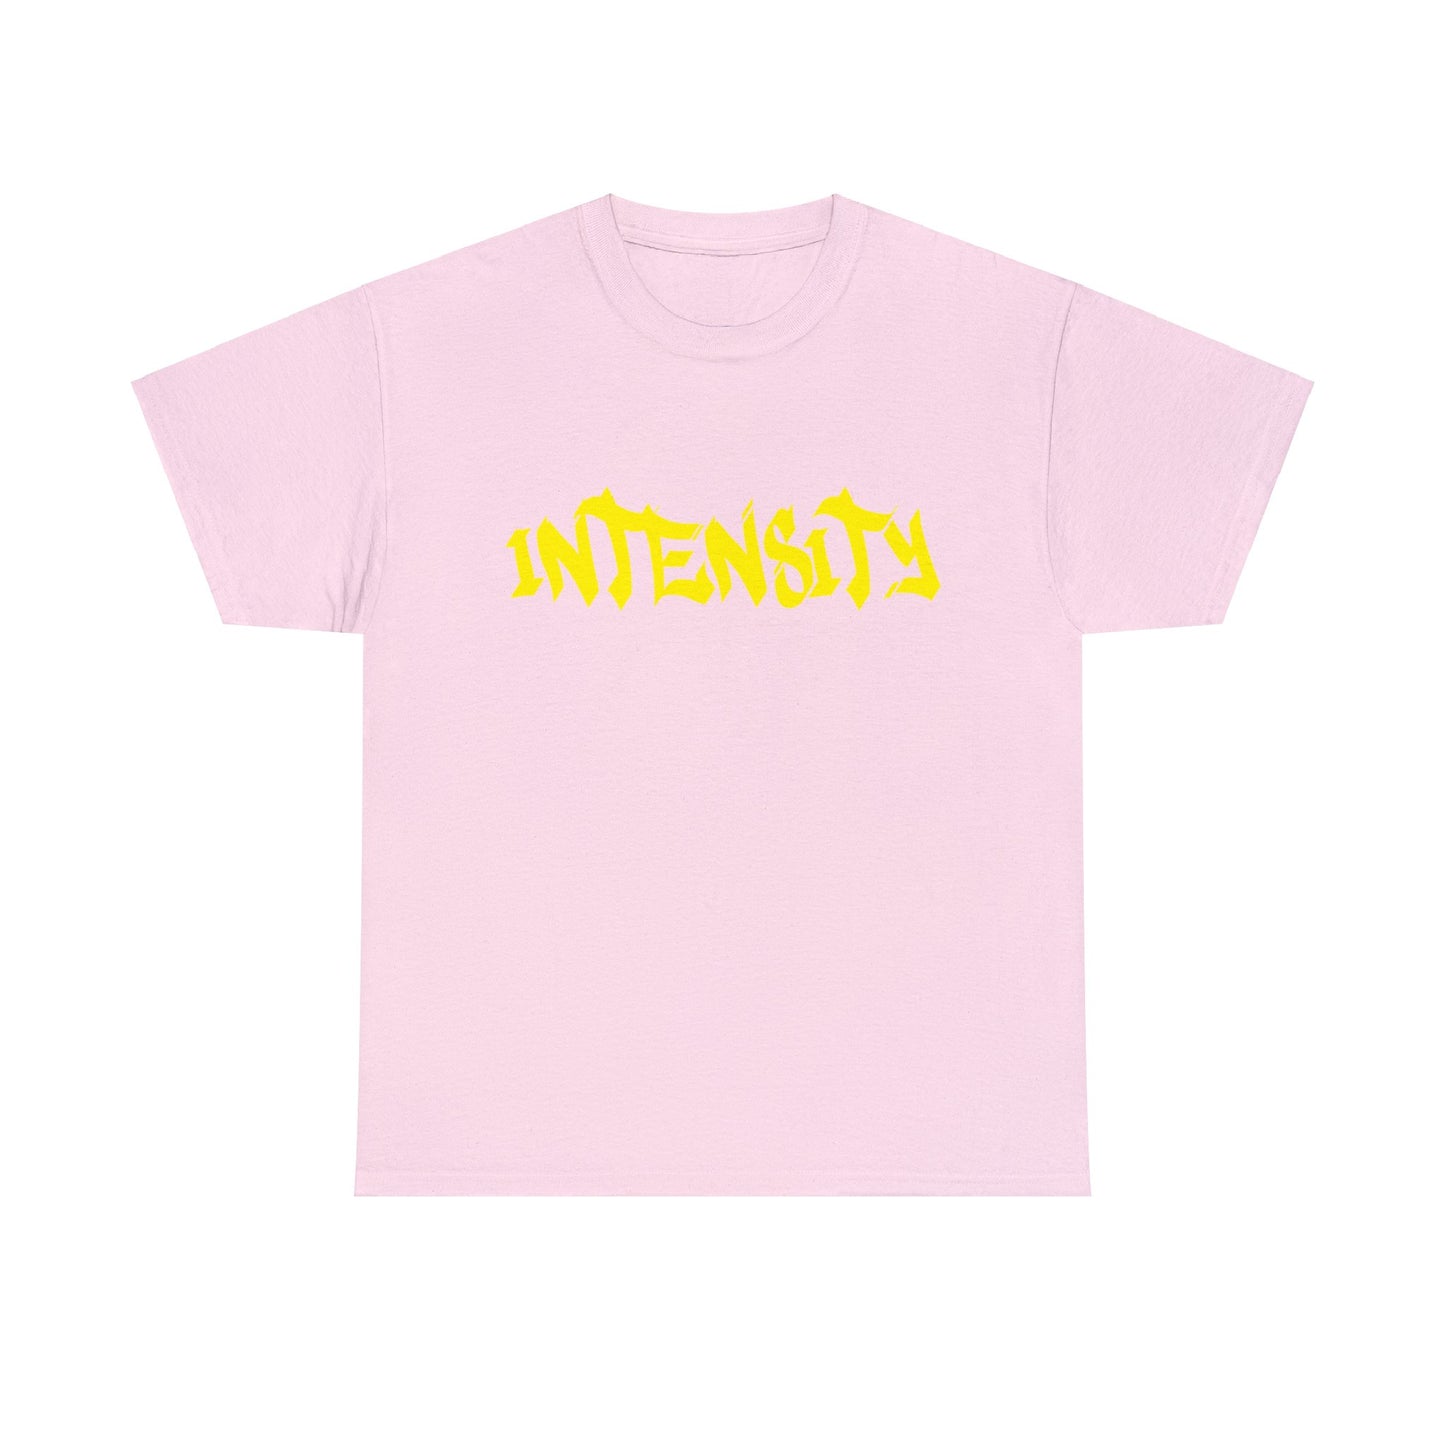 Men's "INTENSITY" T-Shirt Yellow Logo